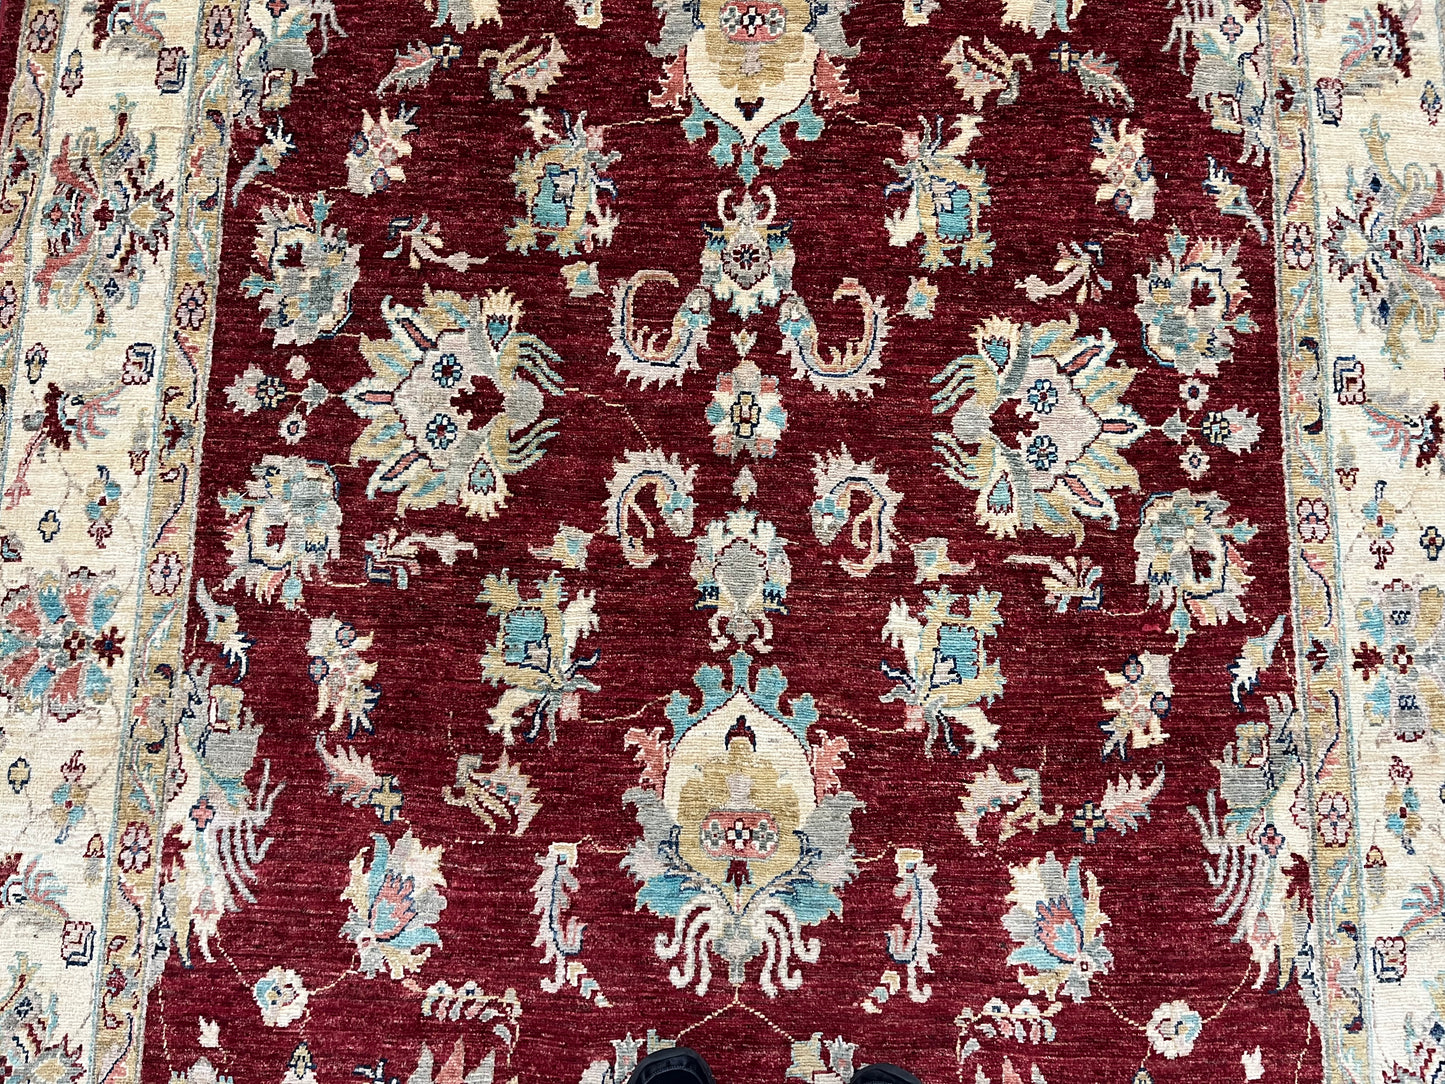 7' X 10' Oushak Ziegler Handmade Wool Rug # 14219